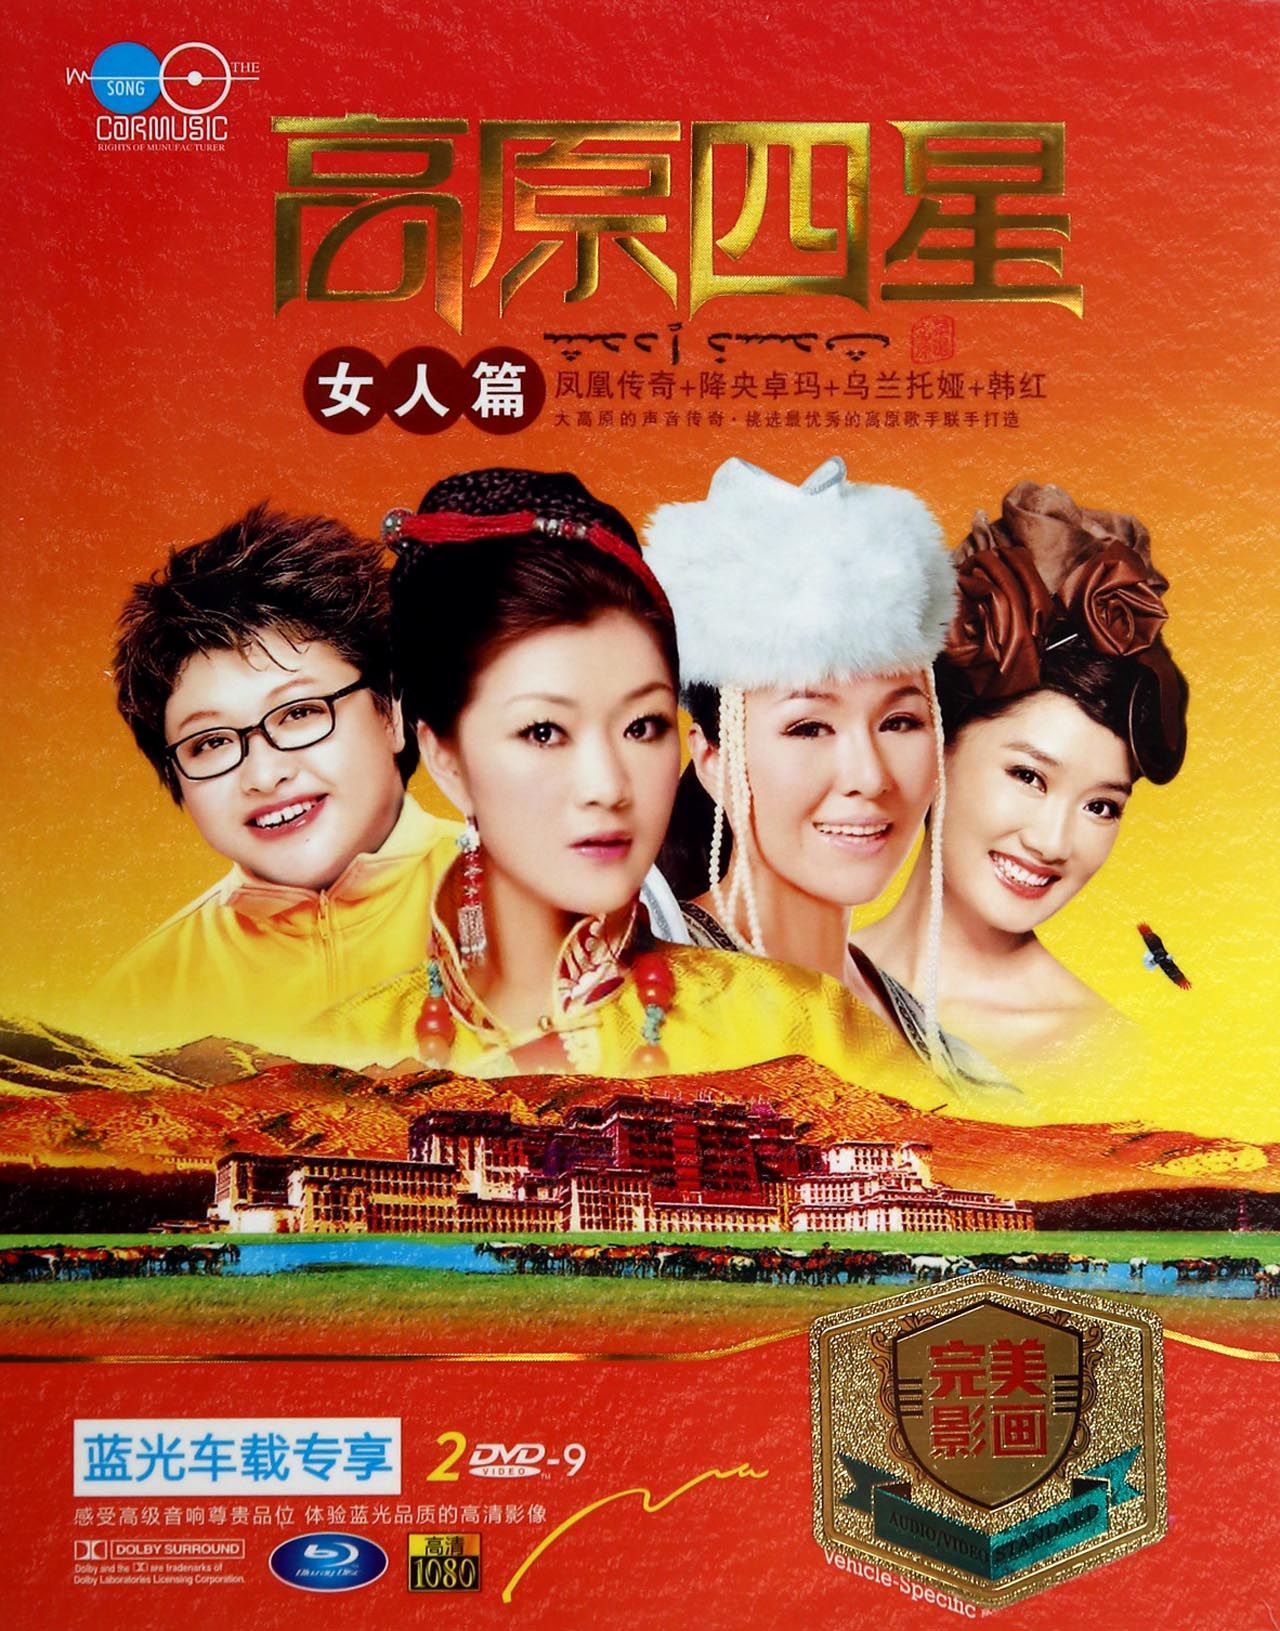 DVD-9高原四星女人篇凤凰传奇降央卓玛乌兰